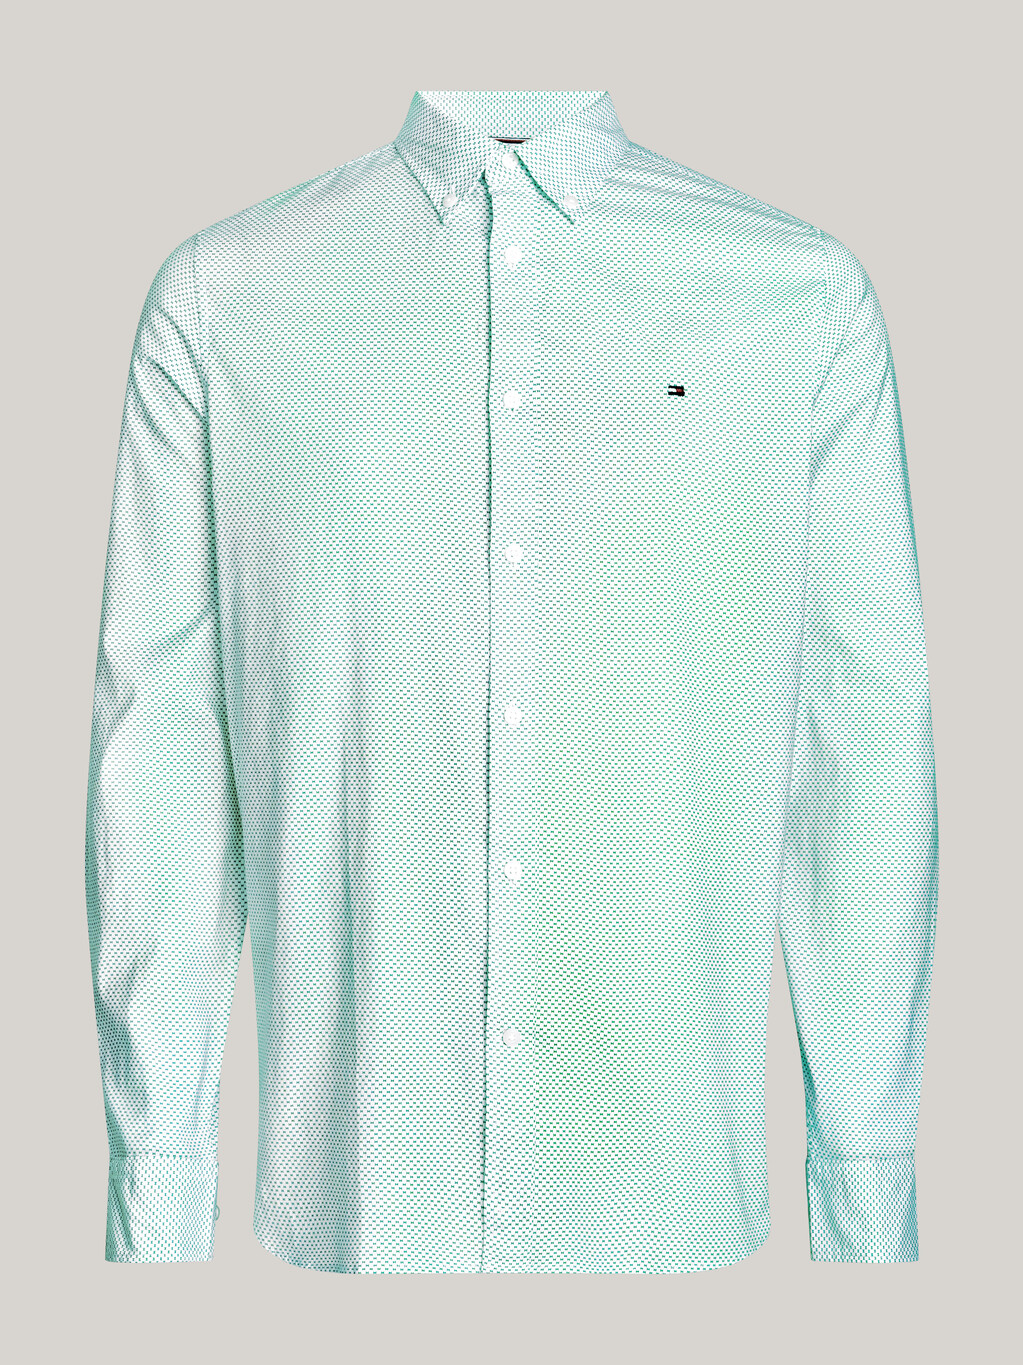 Flex Micro Print Slim Fit Shirt, Optic White / Olympic Green, hi-res